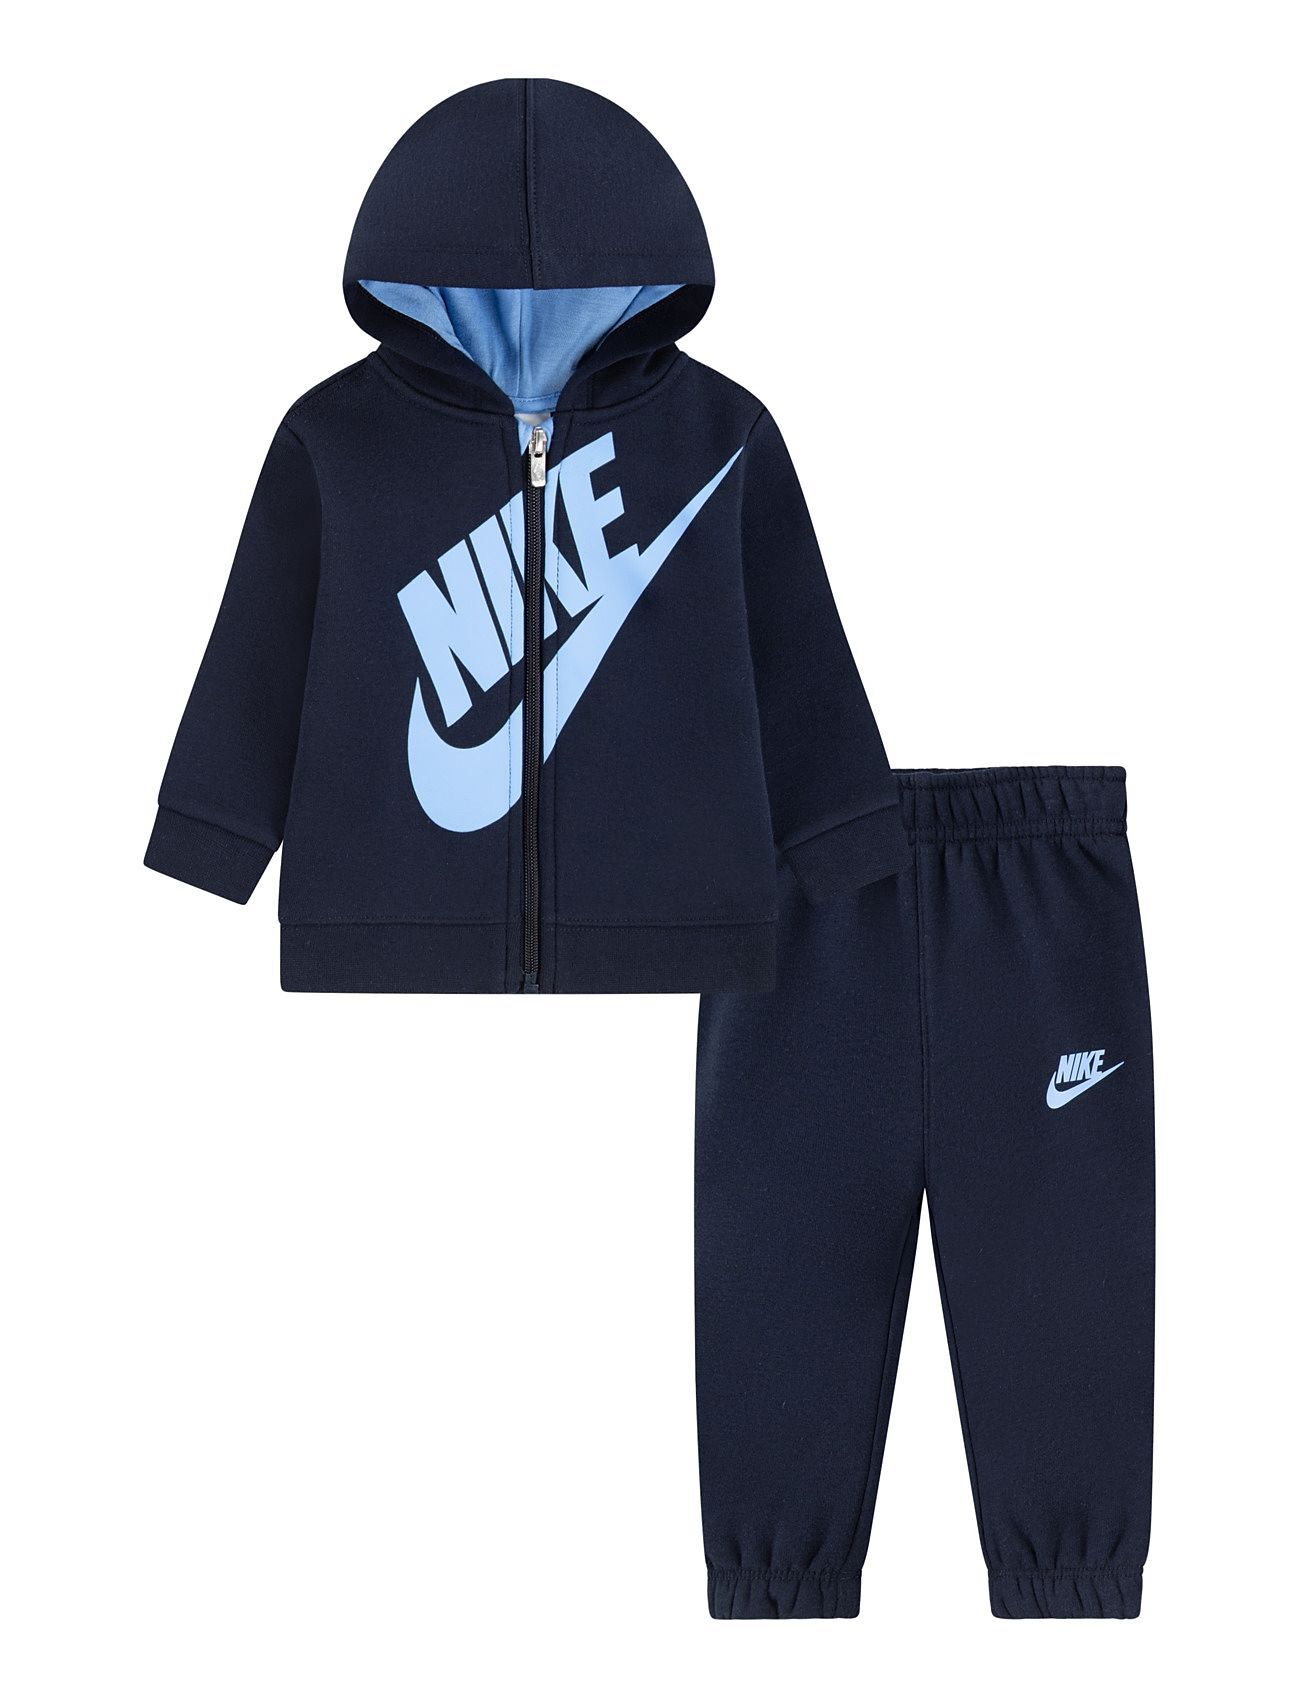 Nike Nkb Sueded Flce Futura Jogg Set Joggedress Blå Nike